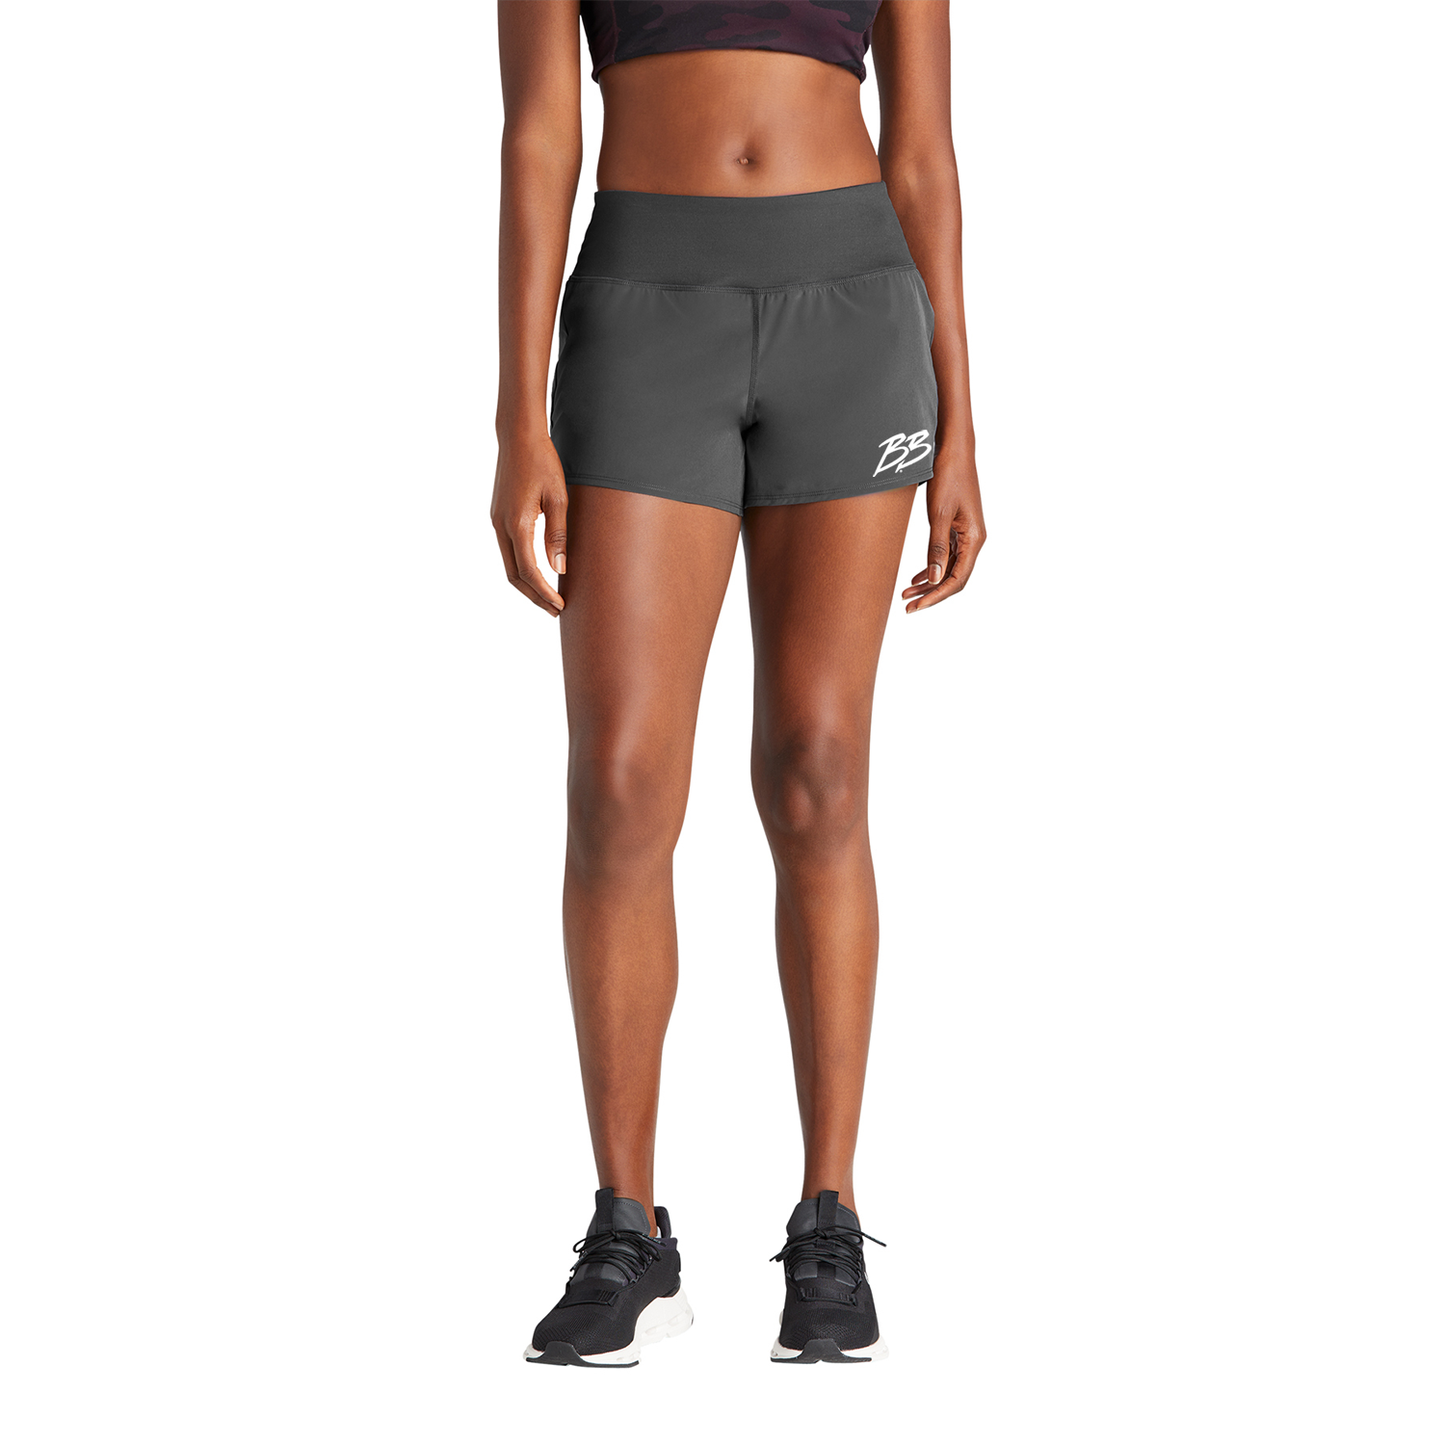 Brick Bodies Sport-Tek Ladies Short